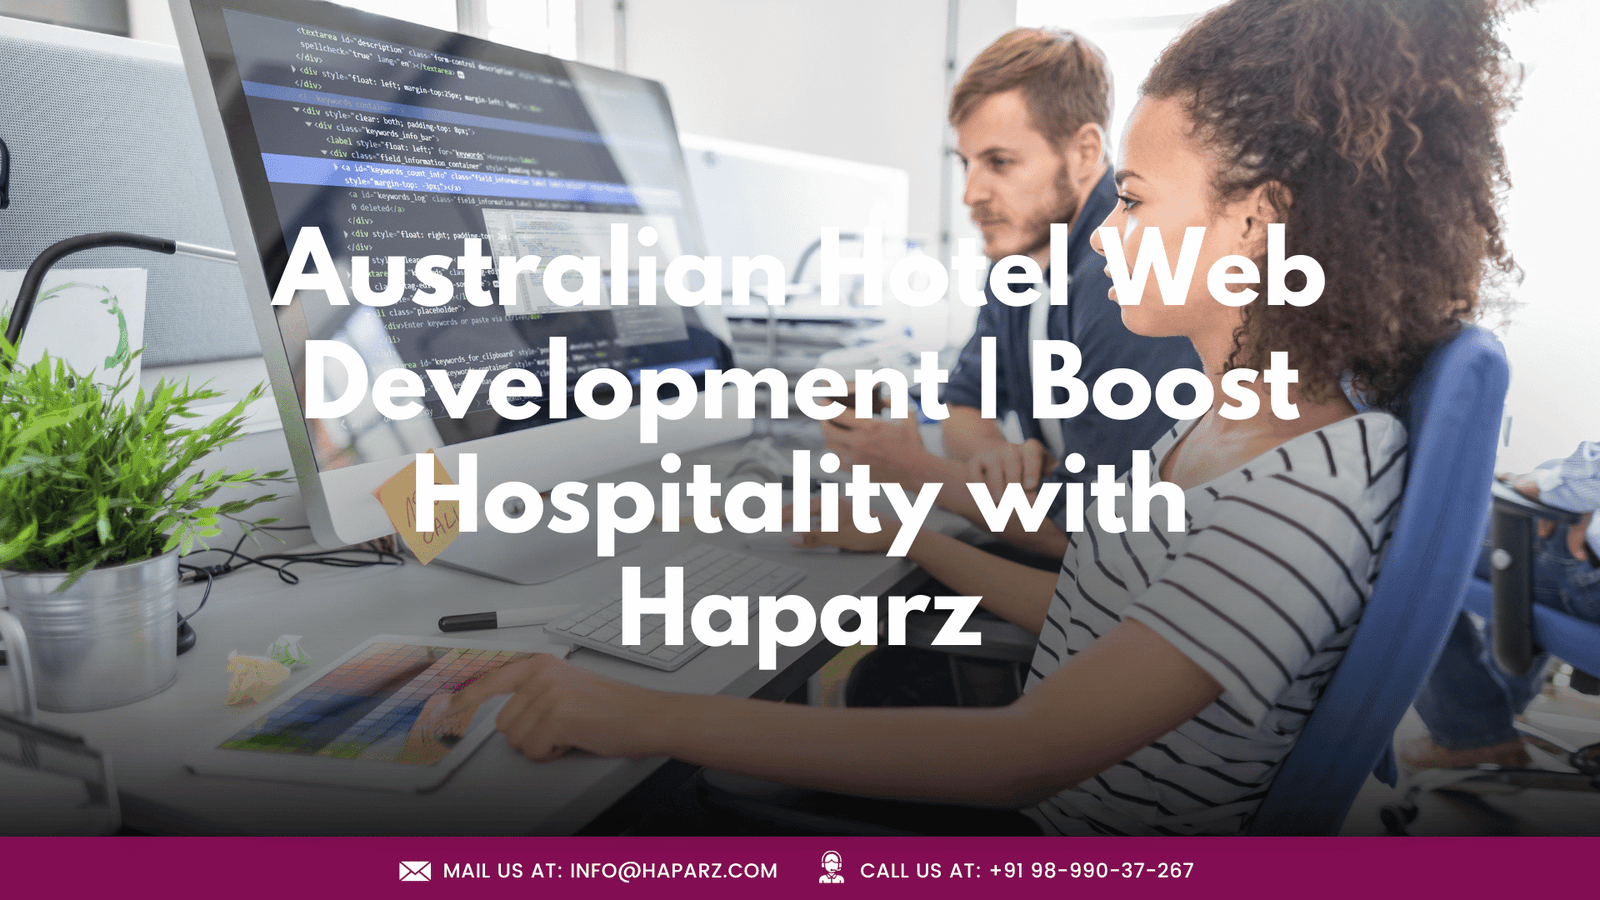 Australian Hotel Web Development | Boost Hospitality with Haparz